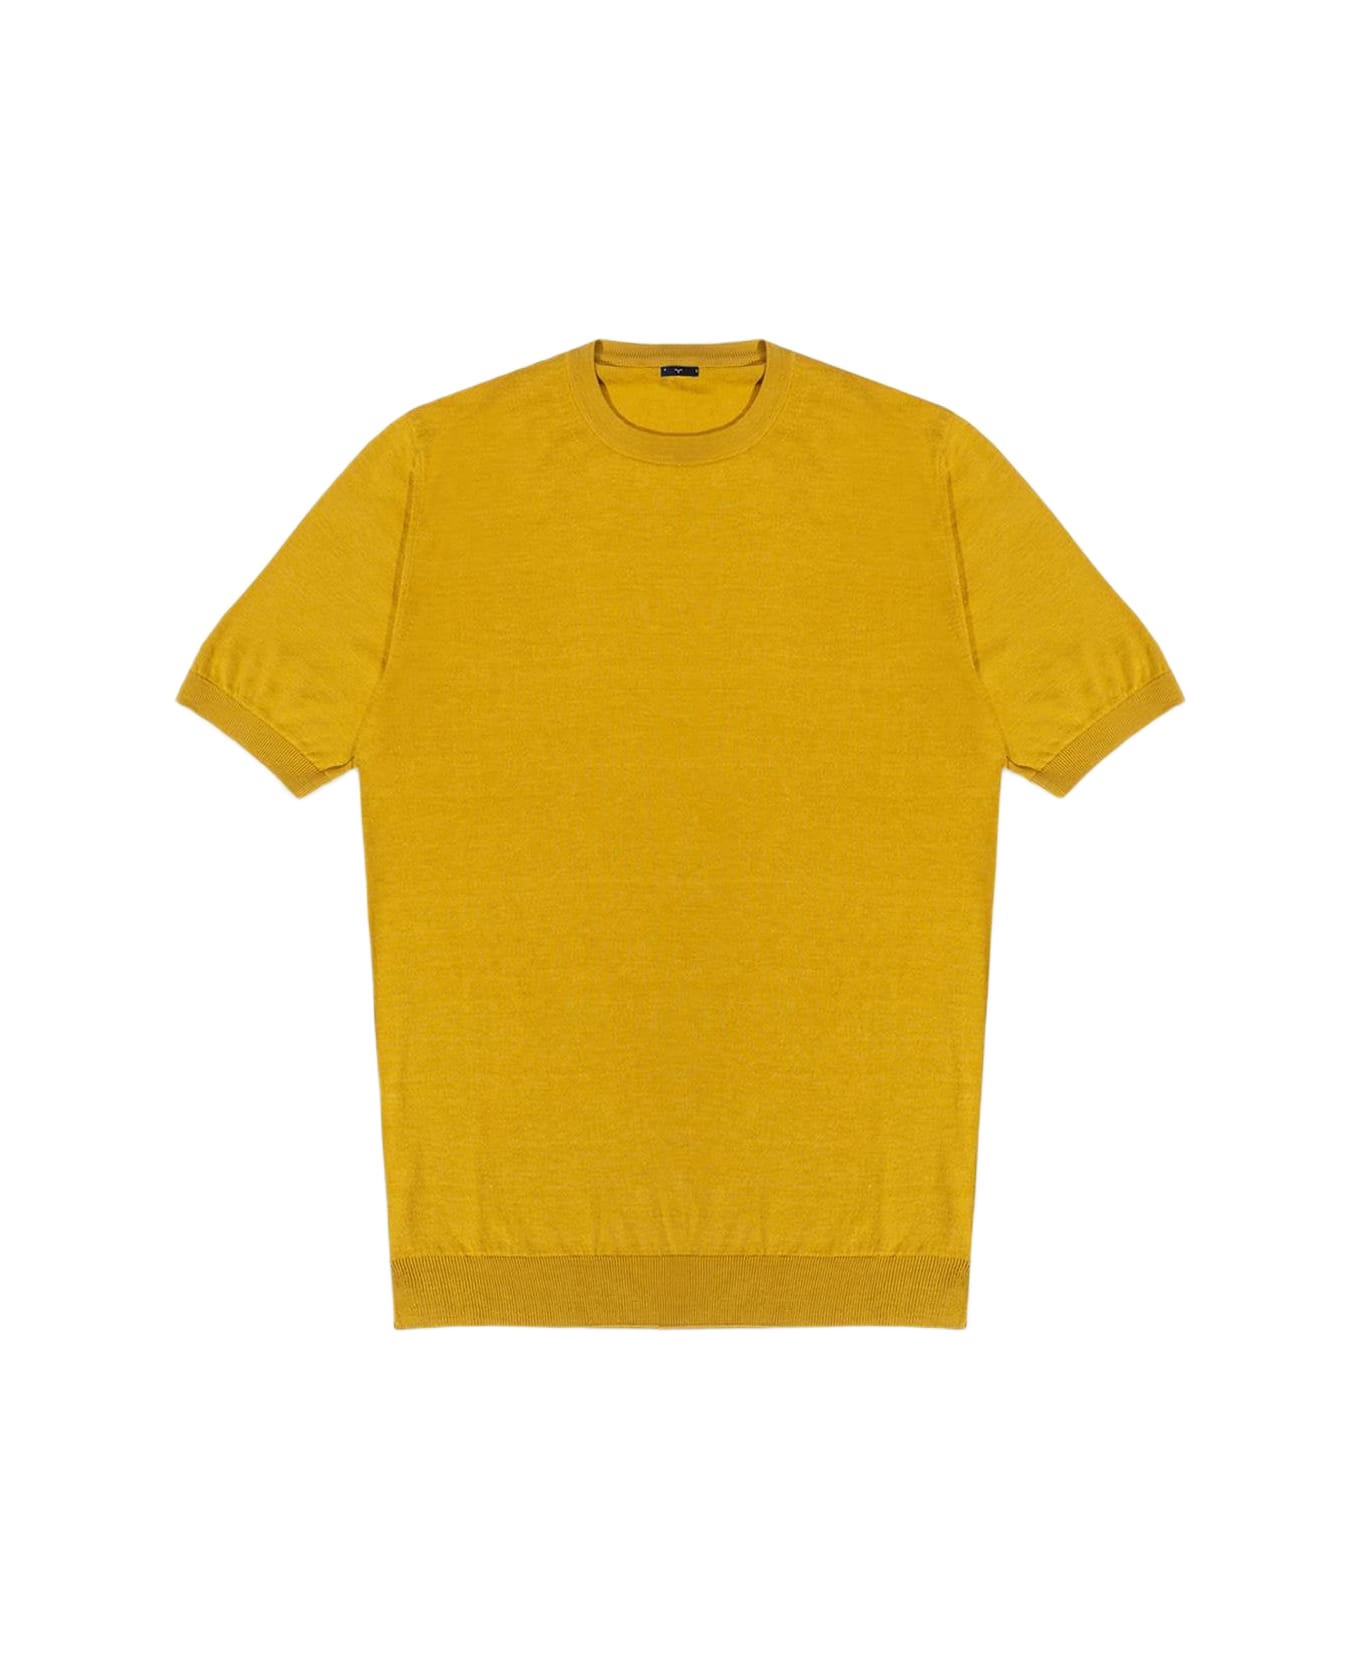 Larusmiani 'roquebrune' Crewneck Sweater - Yellow